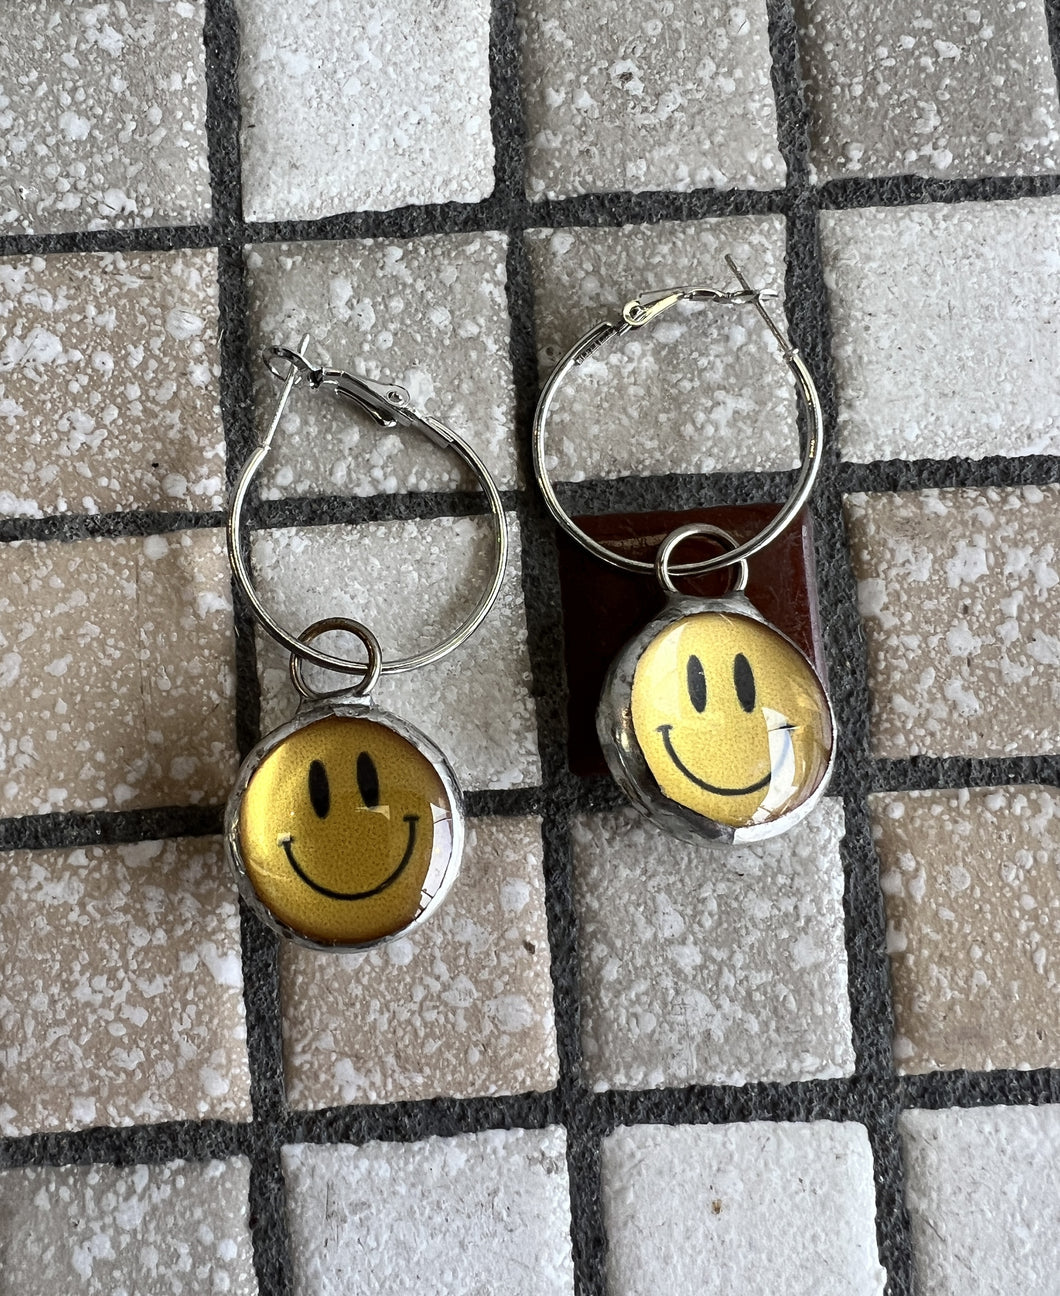 Soldered Smiley Face Earrings on Hoops